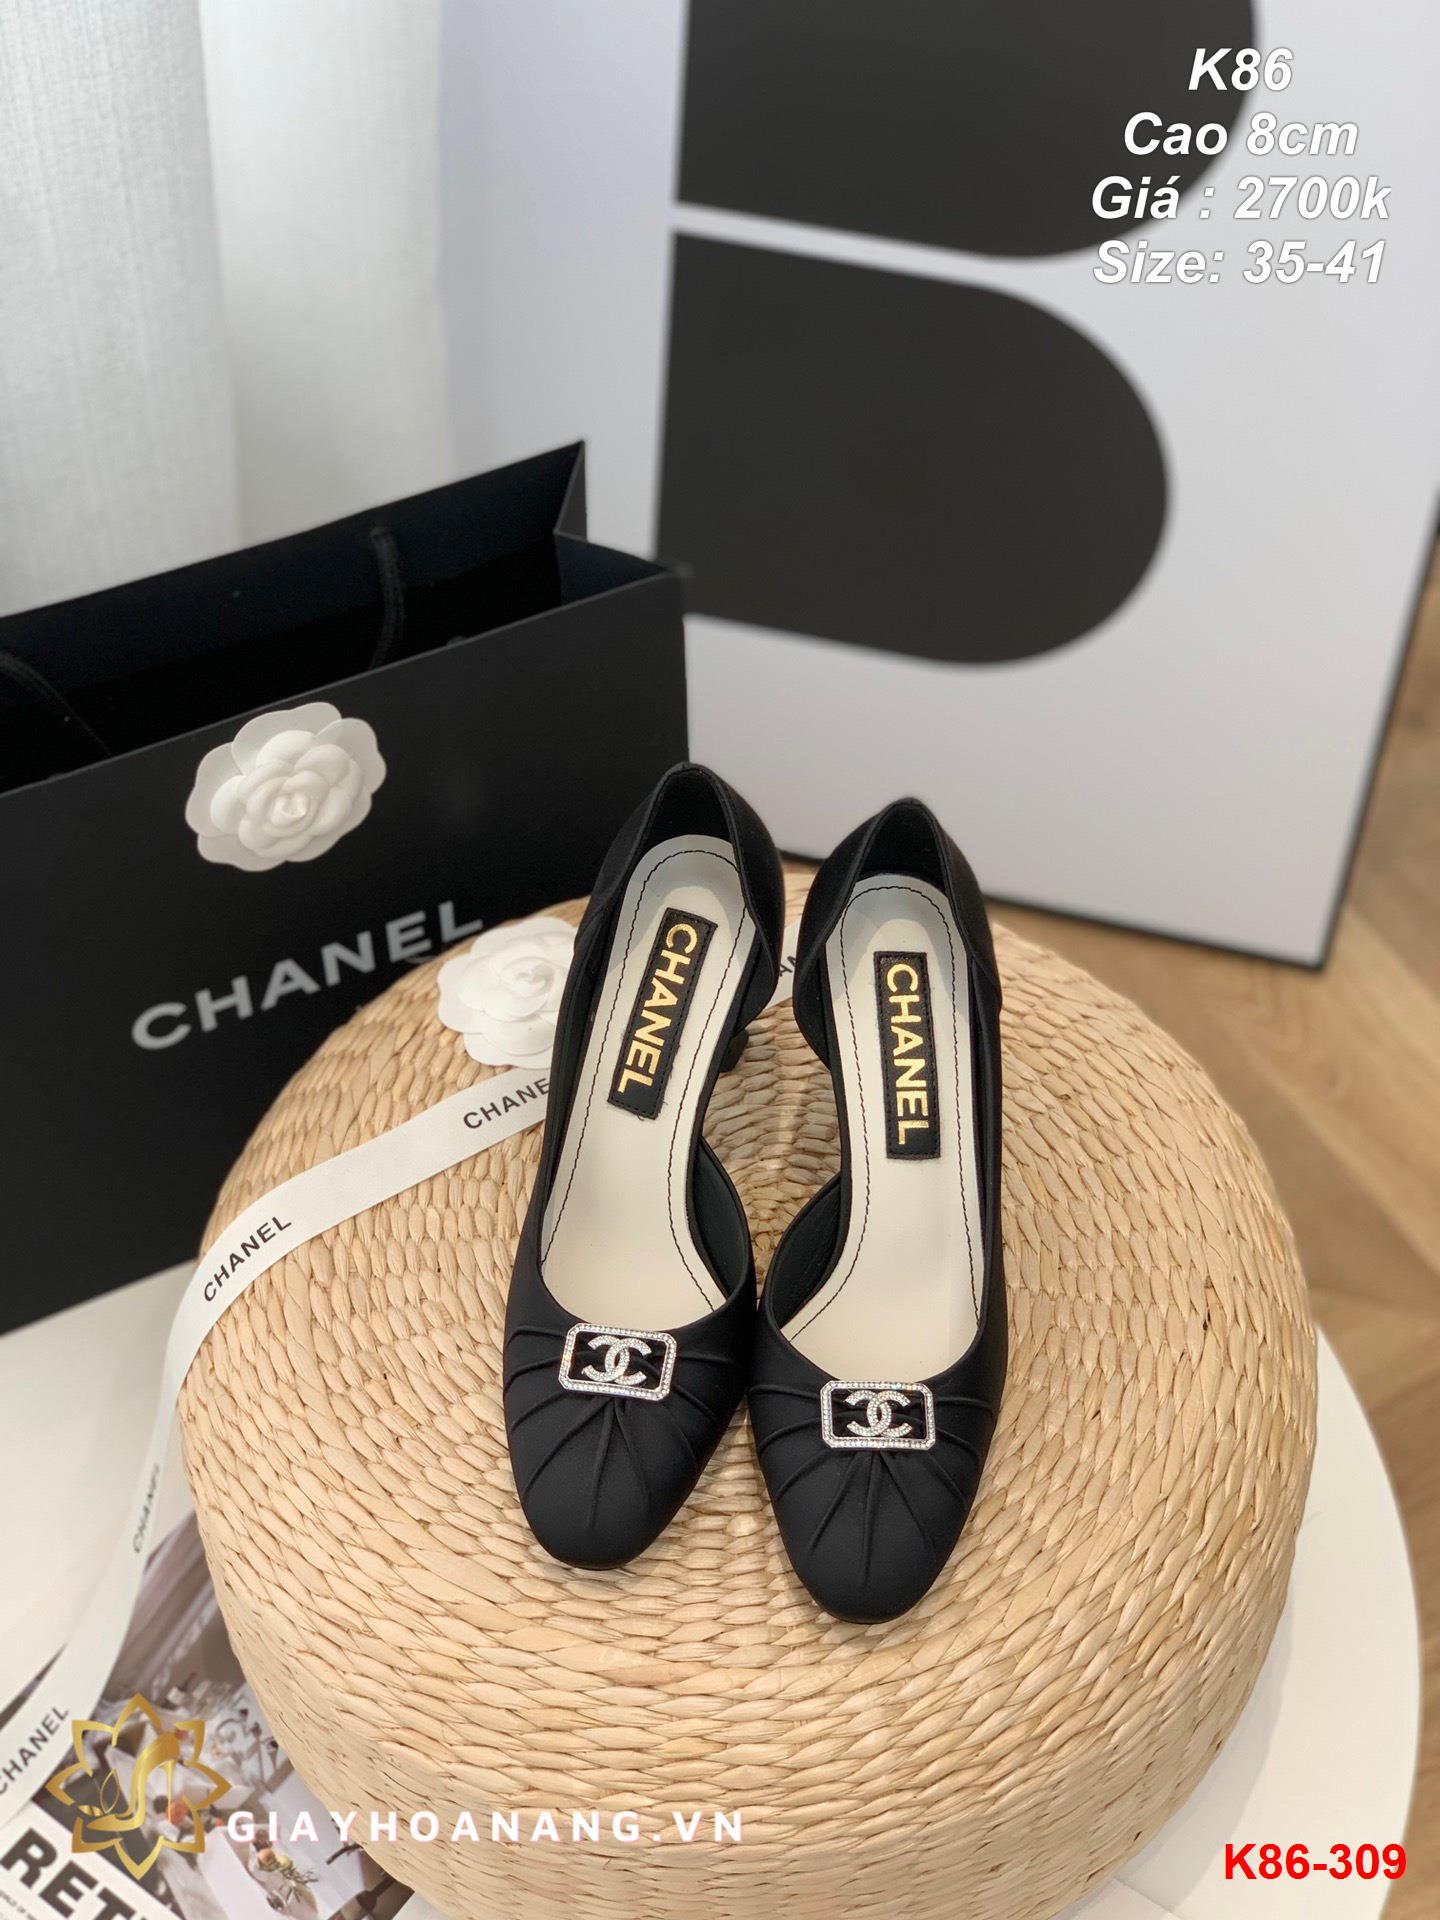 K86-309 Chanel giày cao 8cm siêu cấp